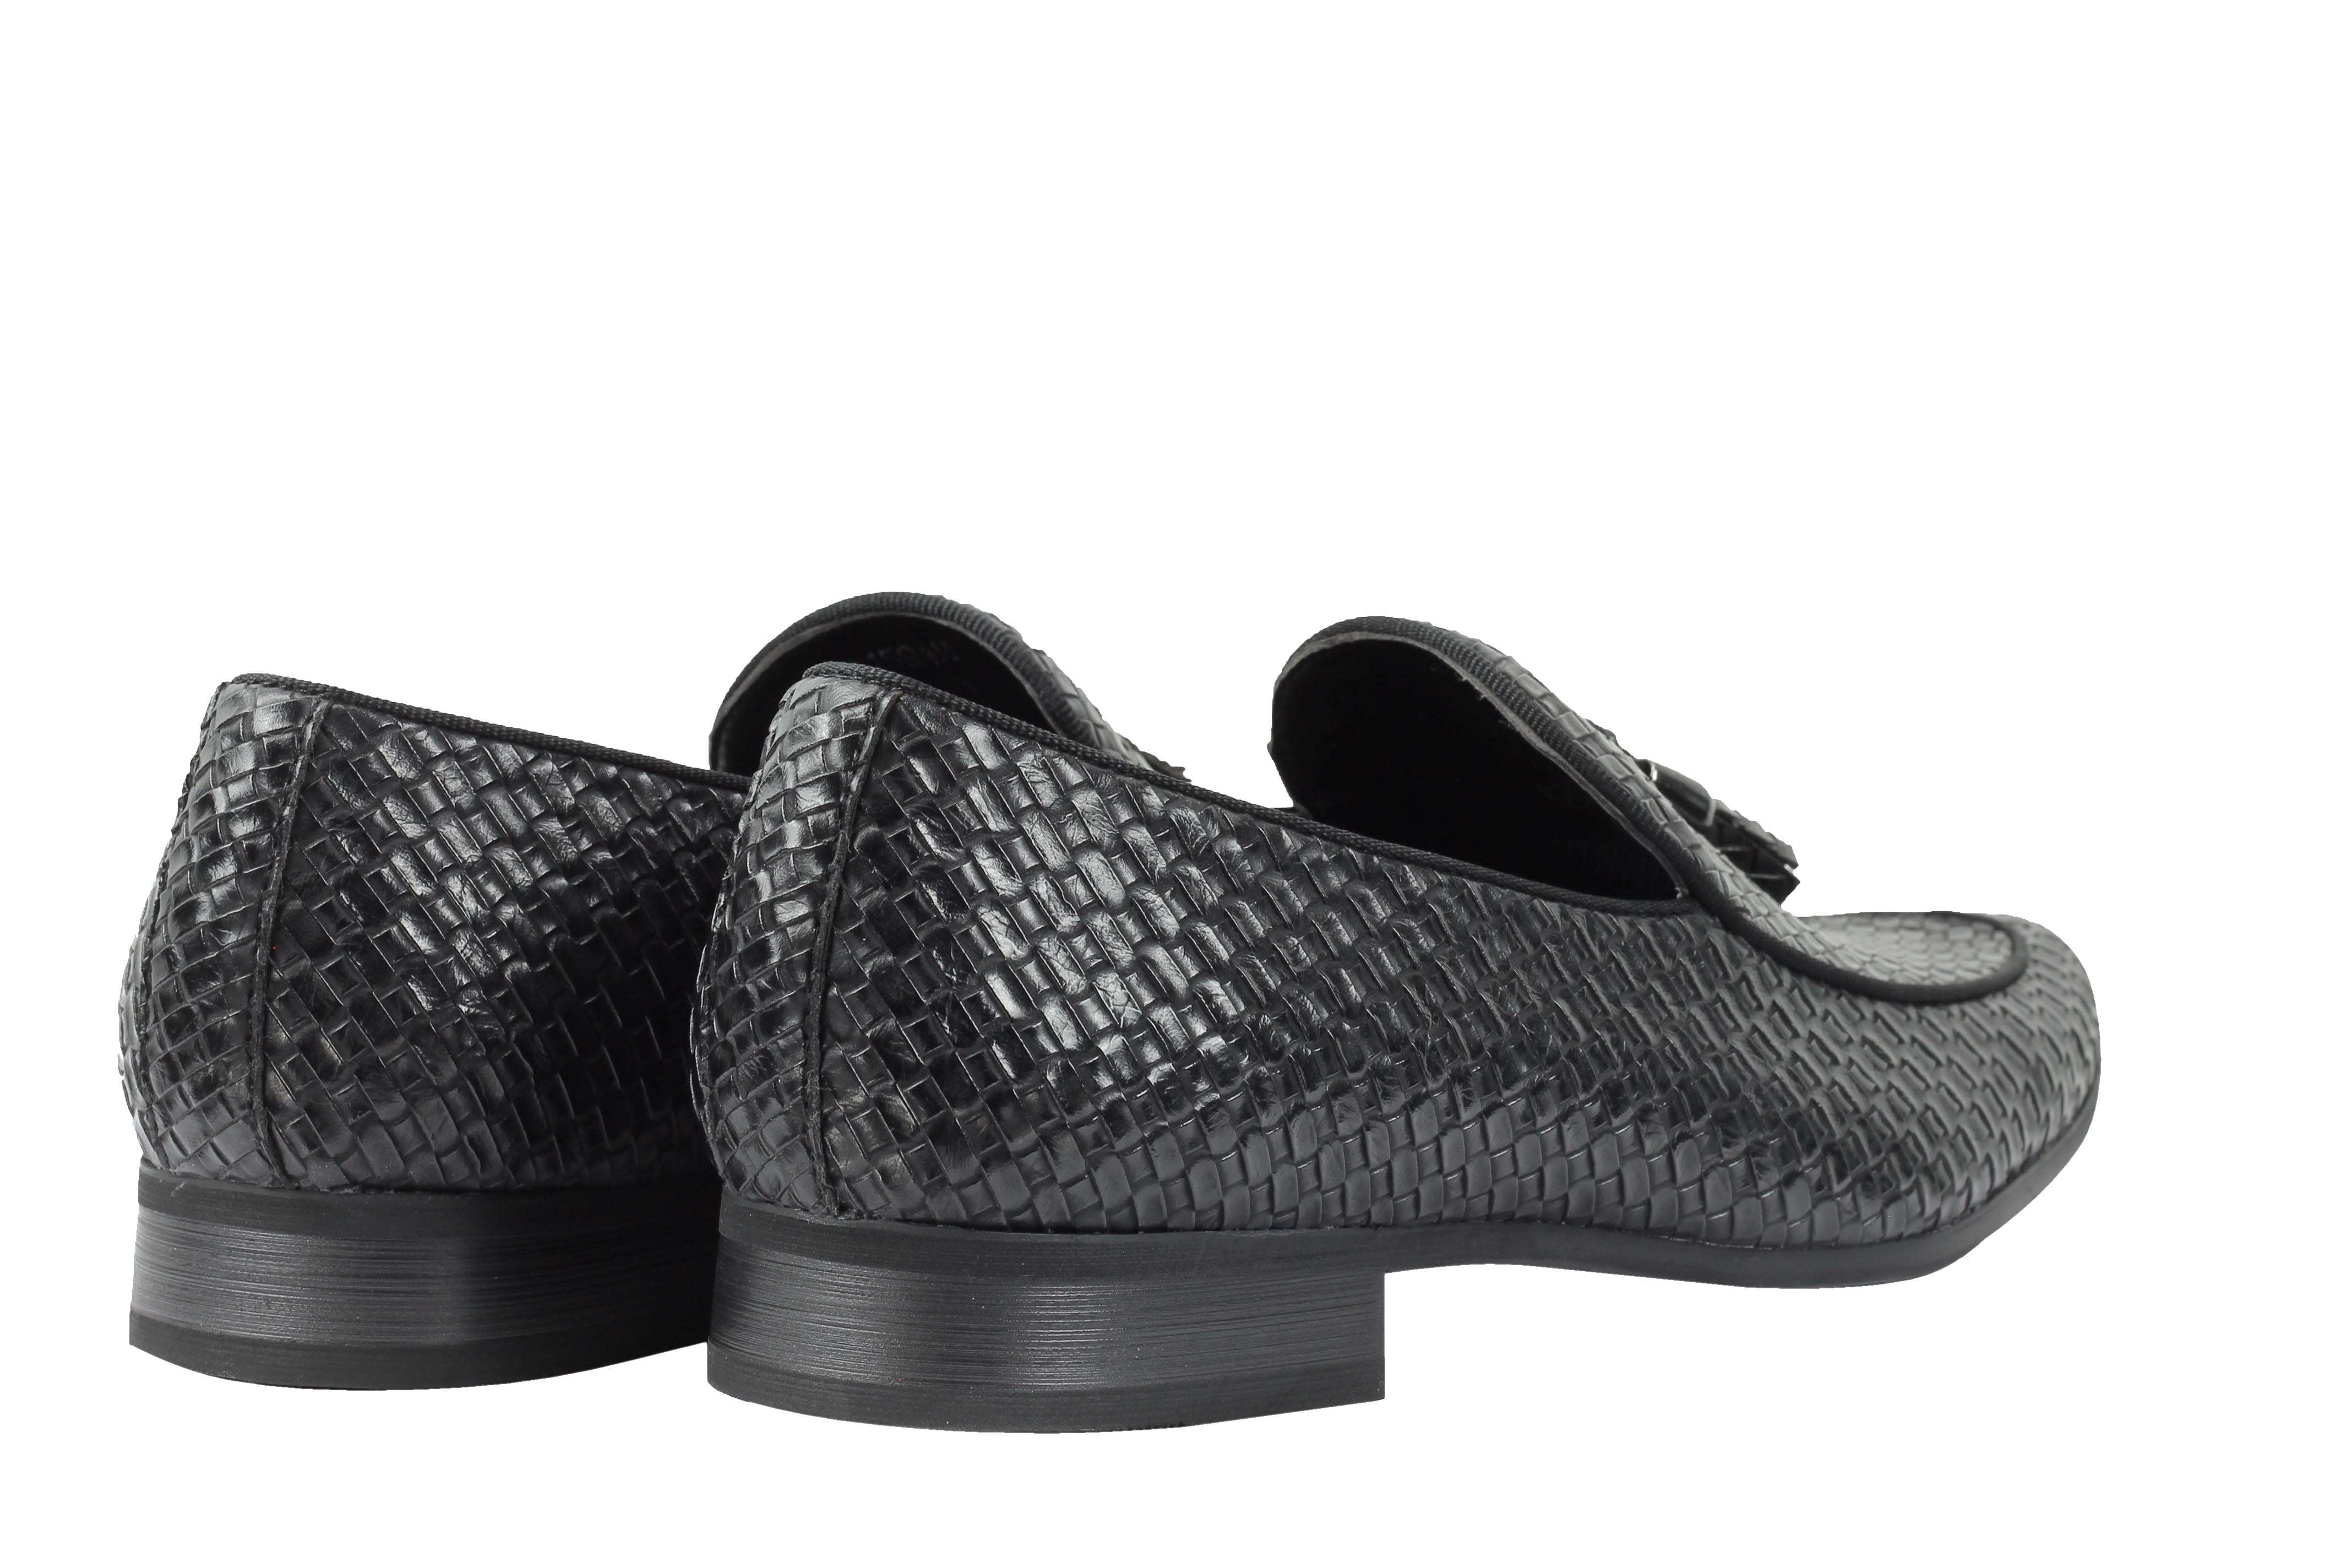 Retro Tassel Moccasin Loafers In Black